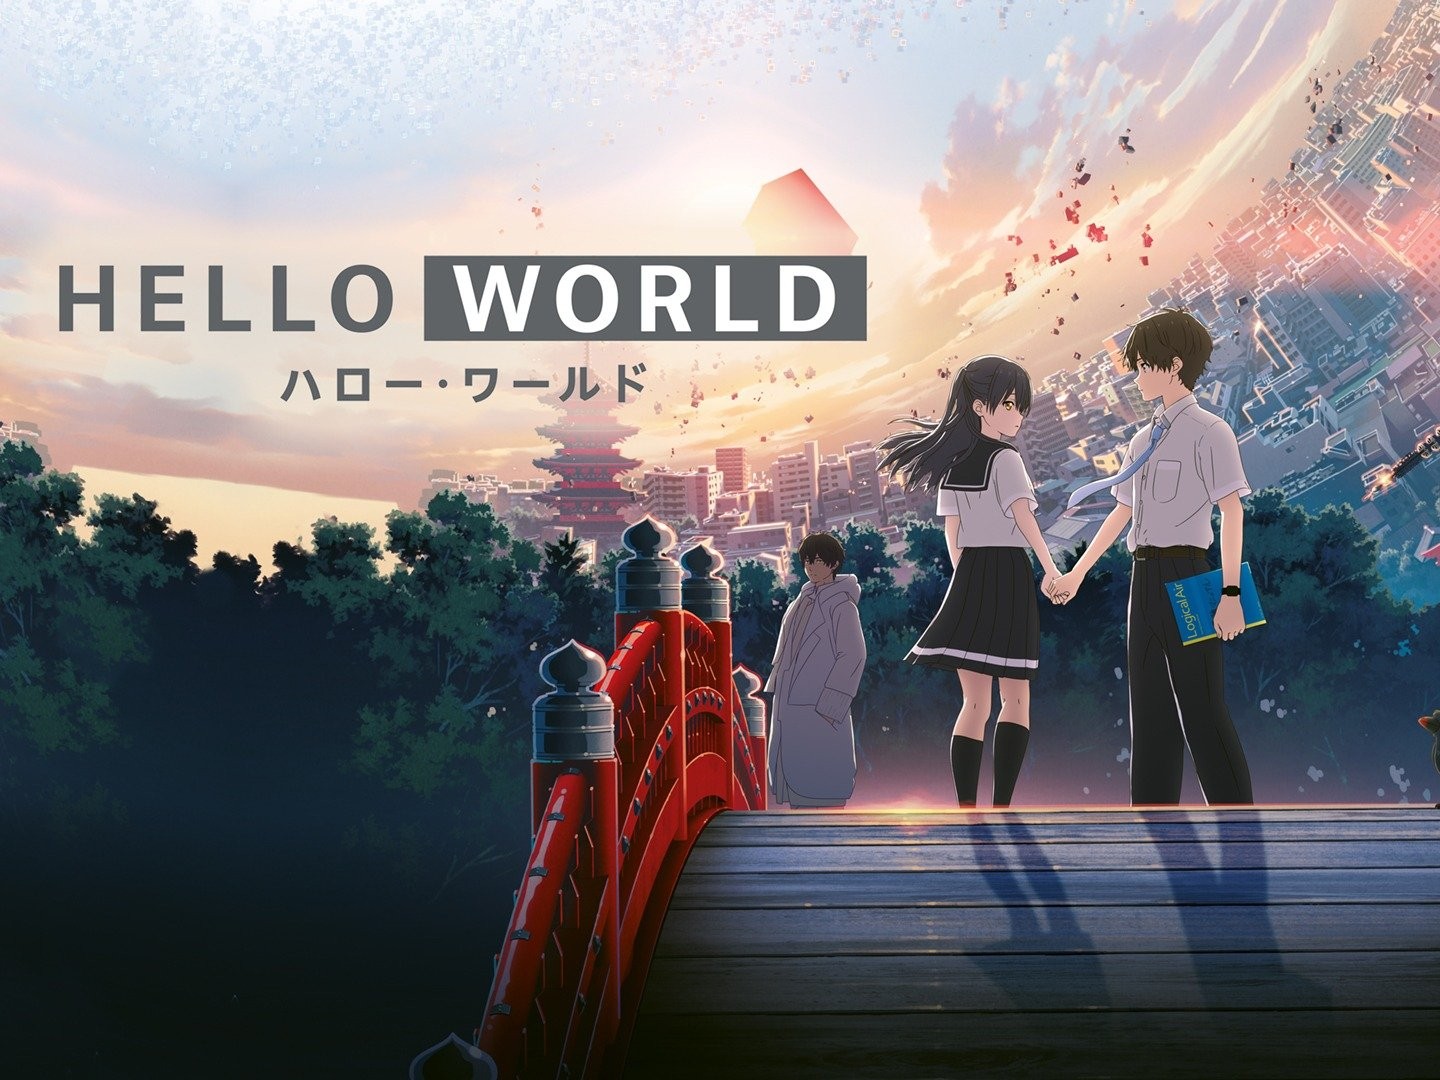 Sword Art Online Director's Hello World Anime Film Previews Songs In  Trailer - News - Anime News Network